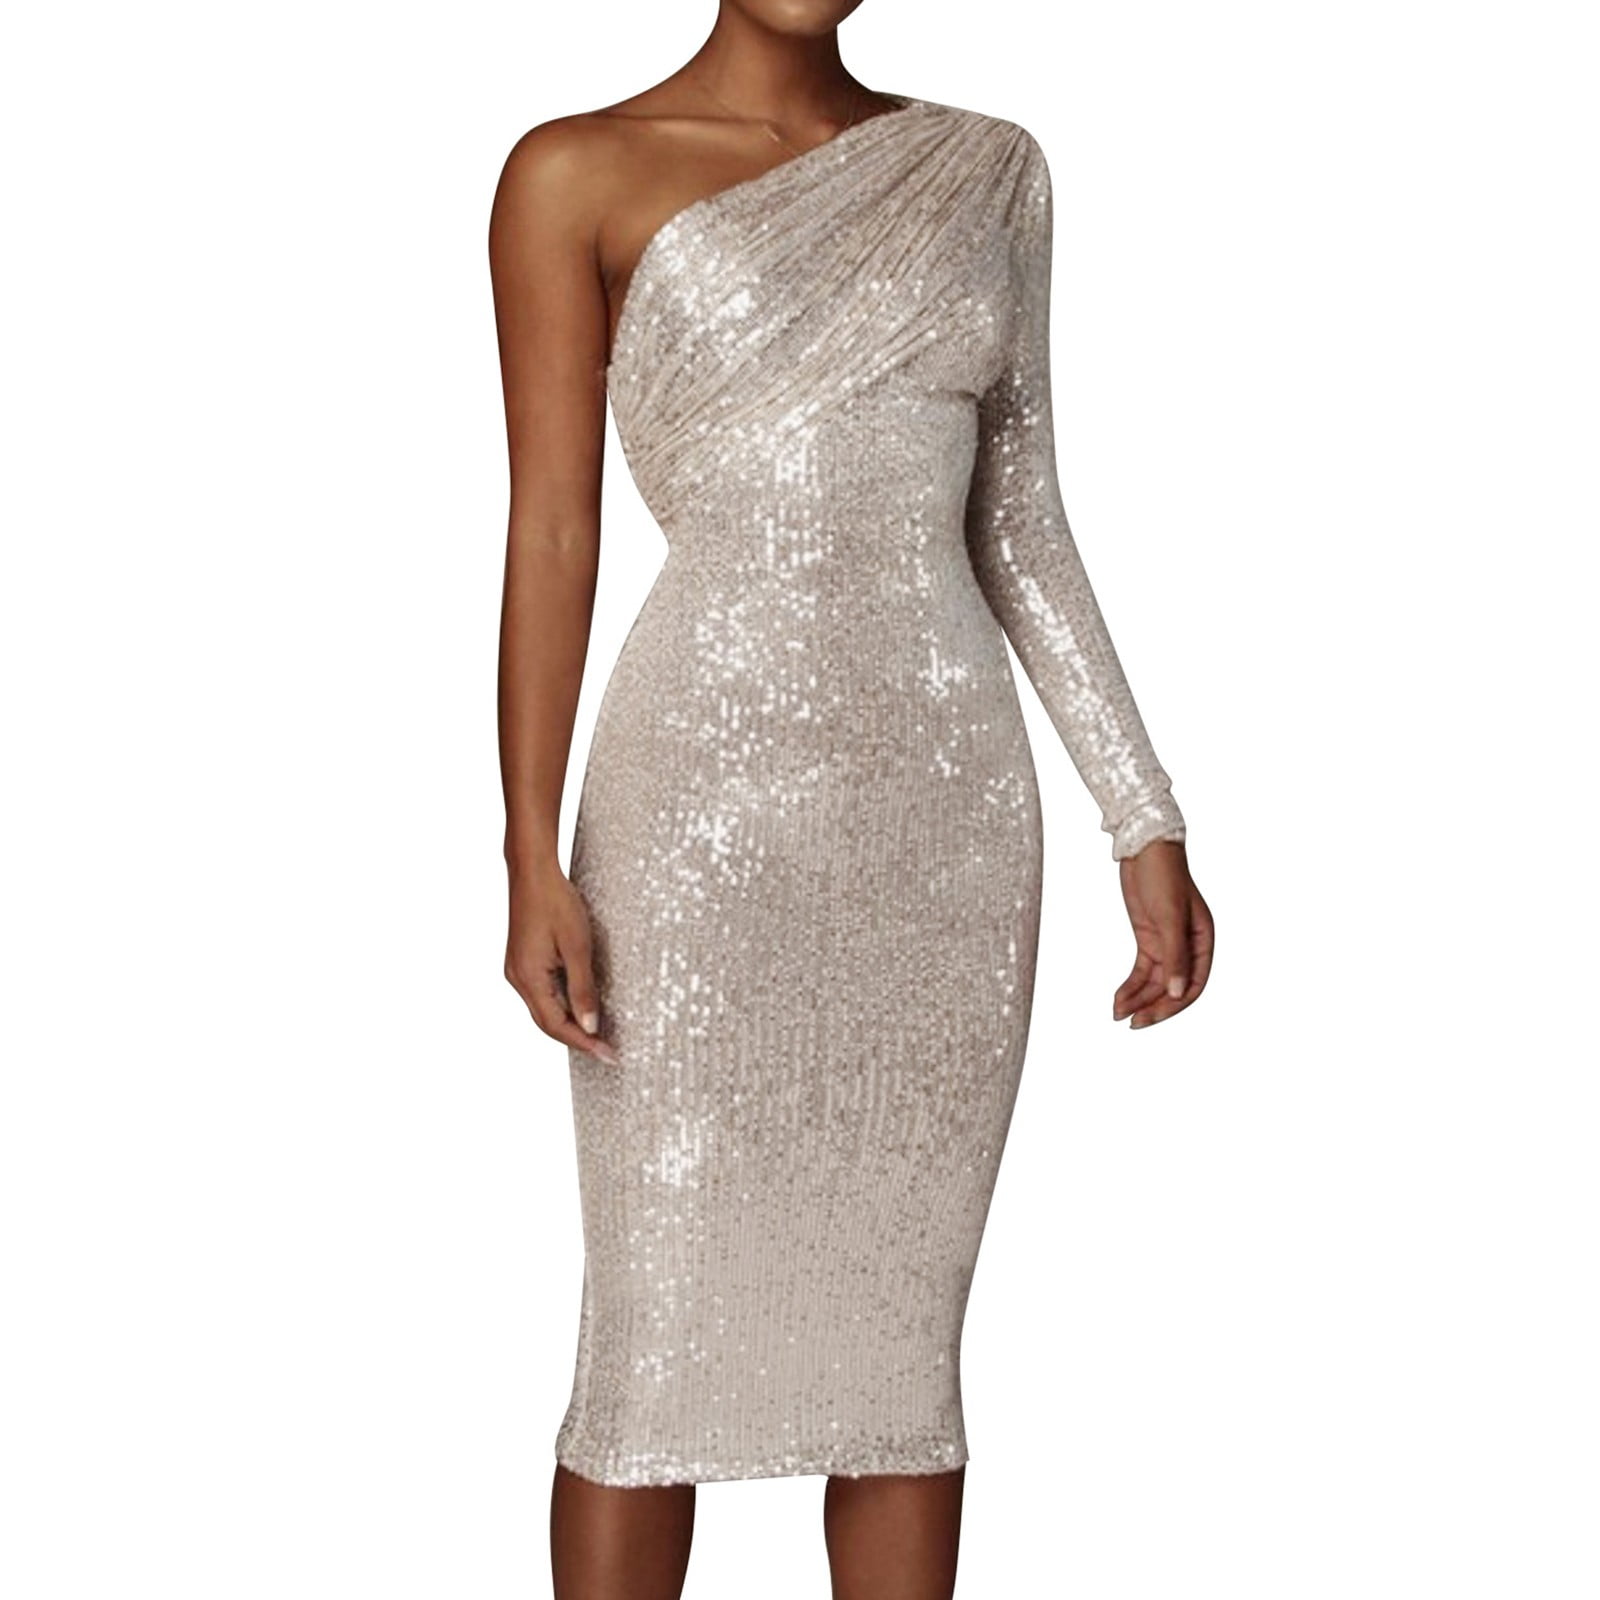 Share 170+ glitter one piece dress latest